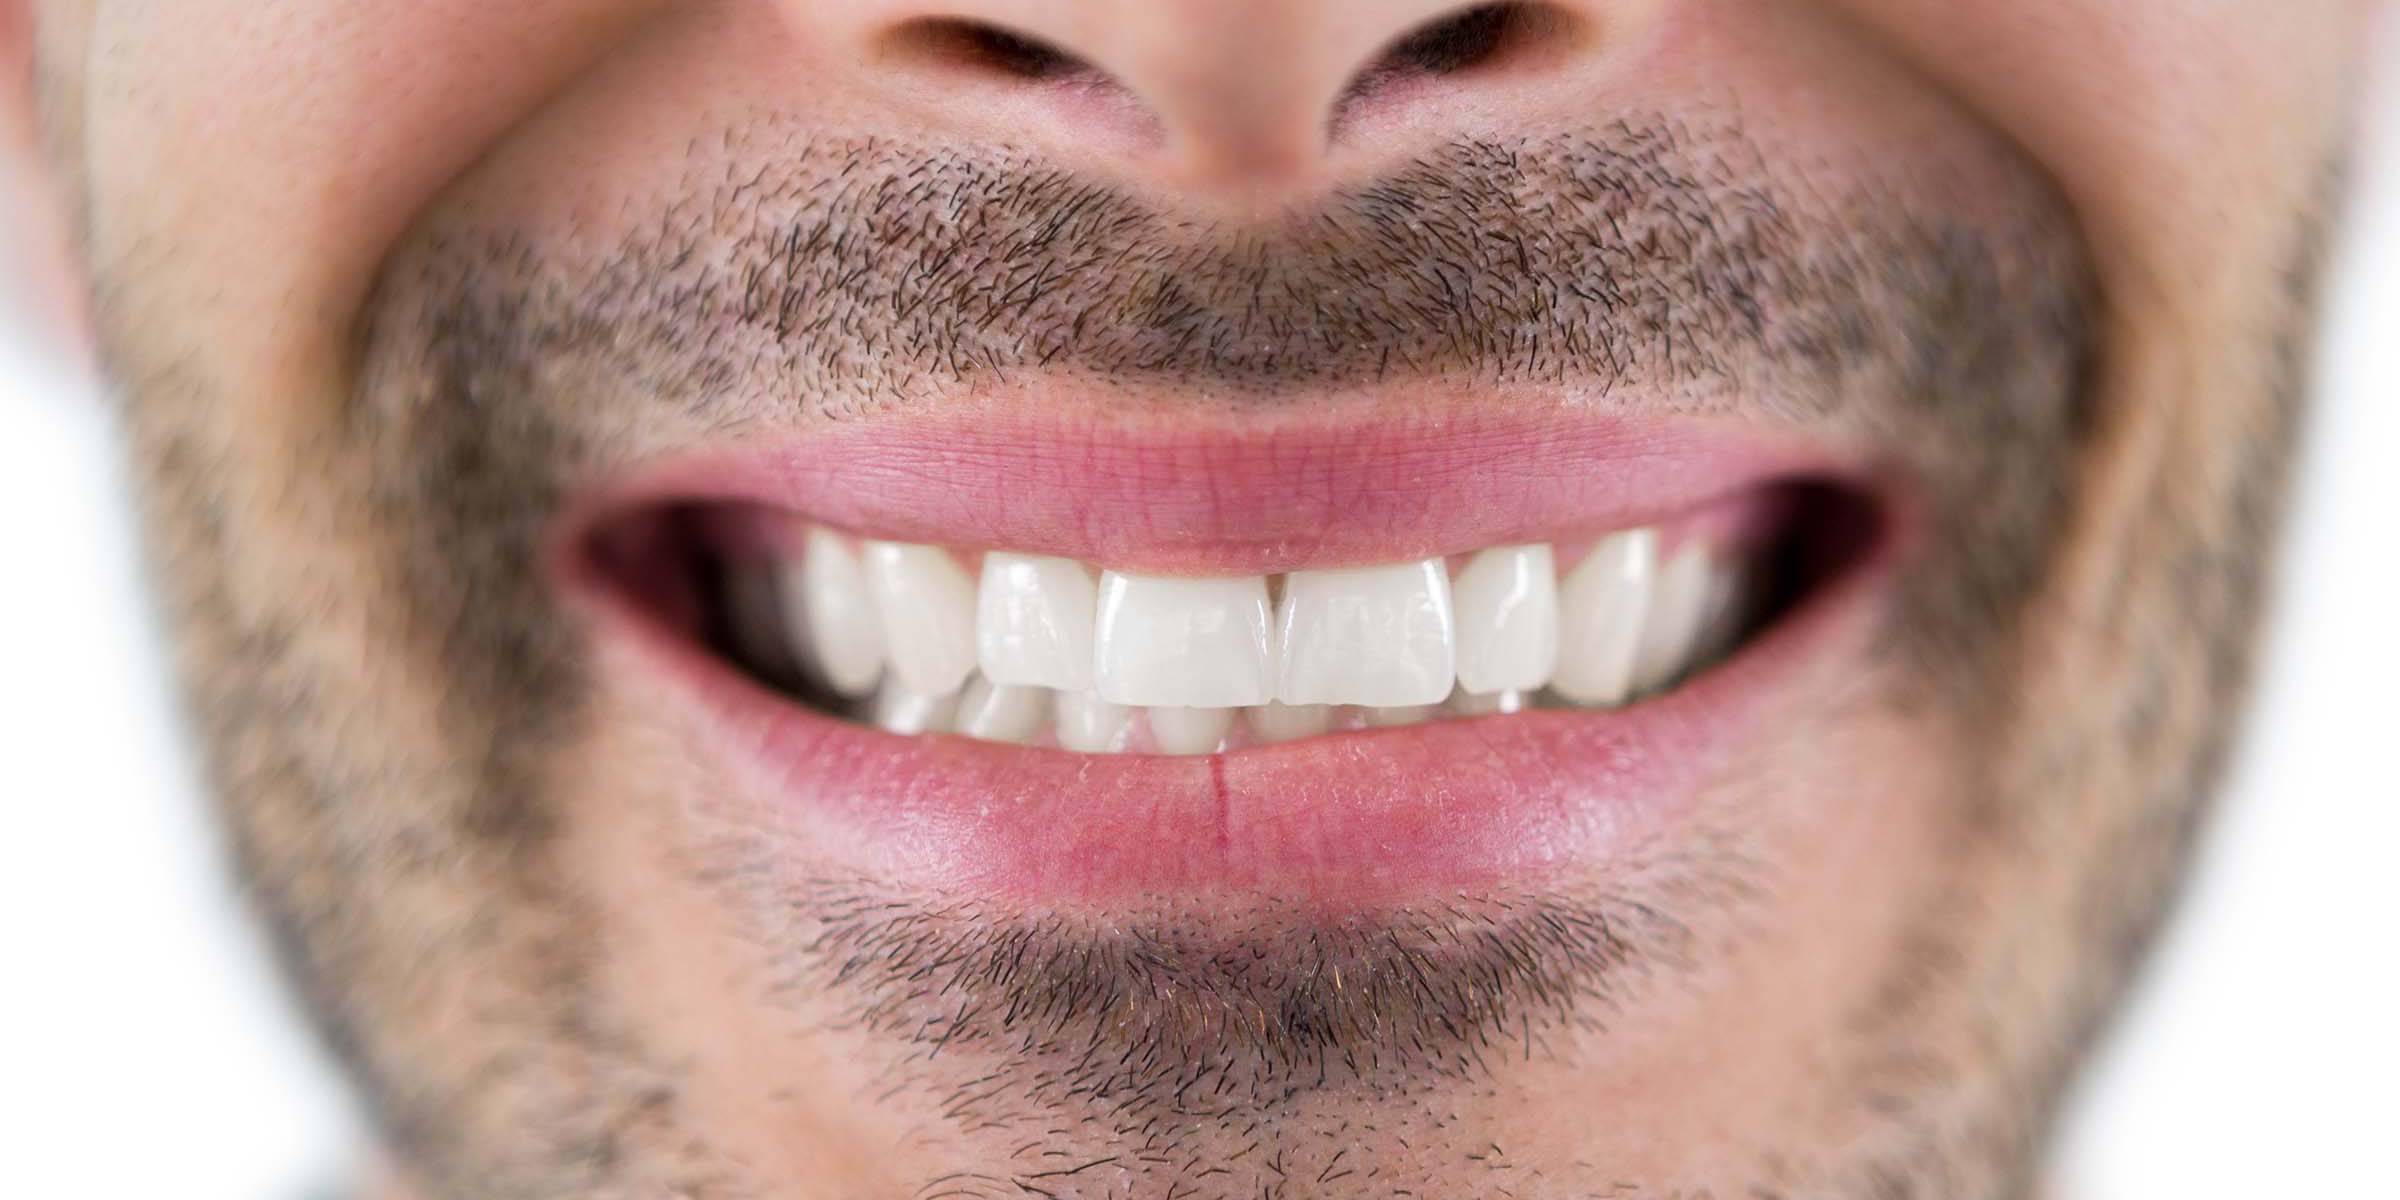 man-showing-his-teeth4-YUFNXWG.jpg